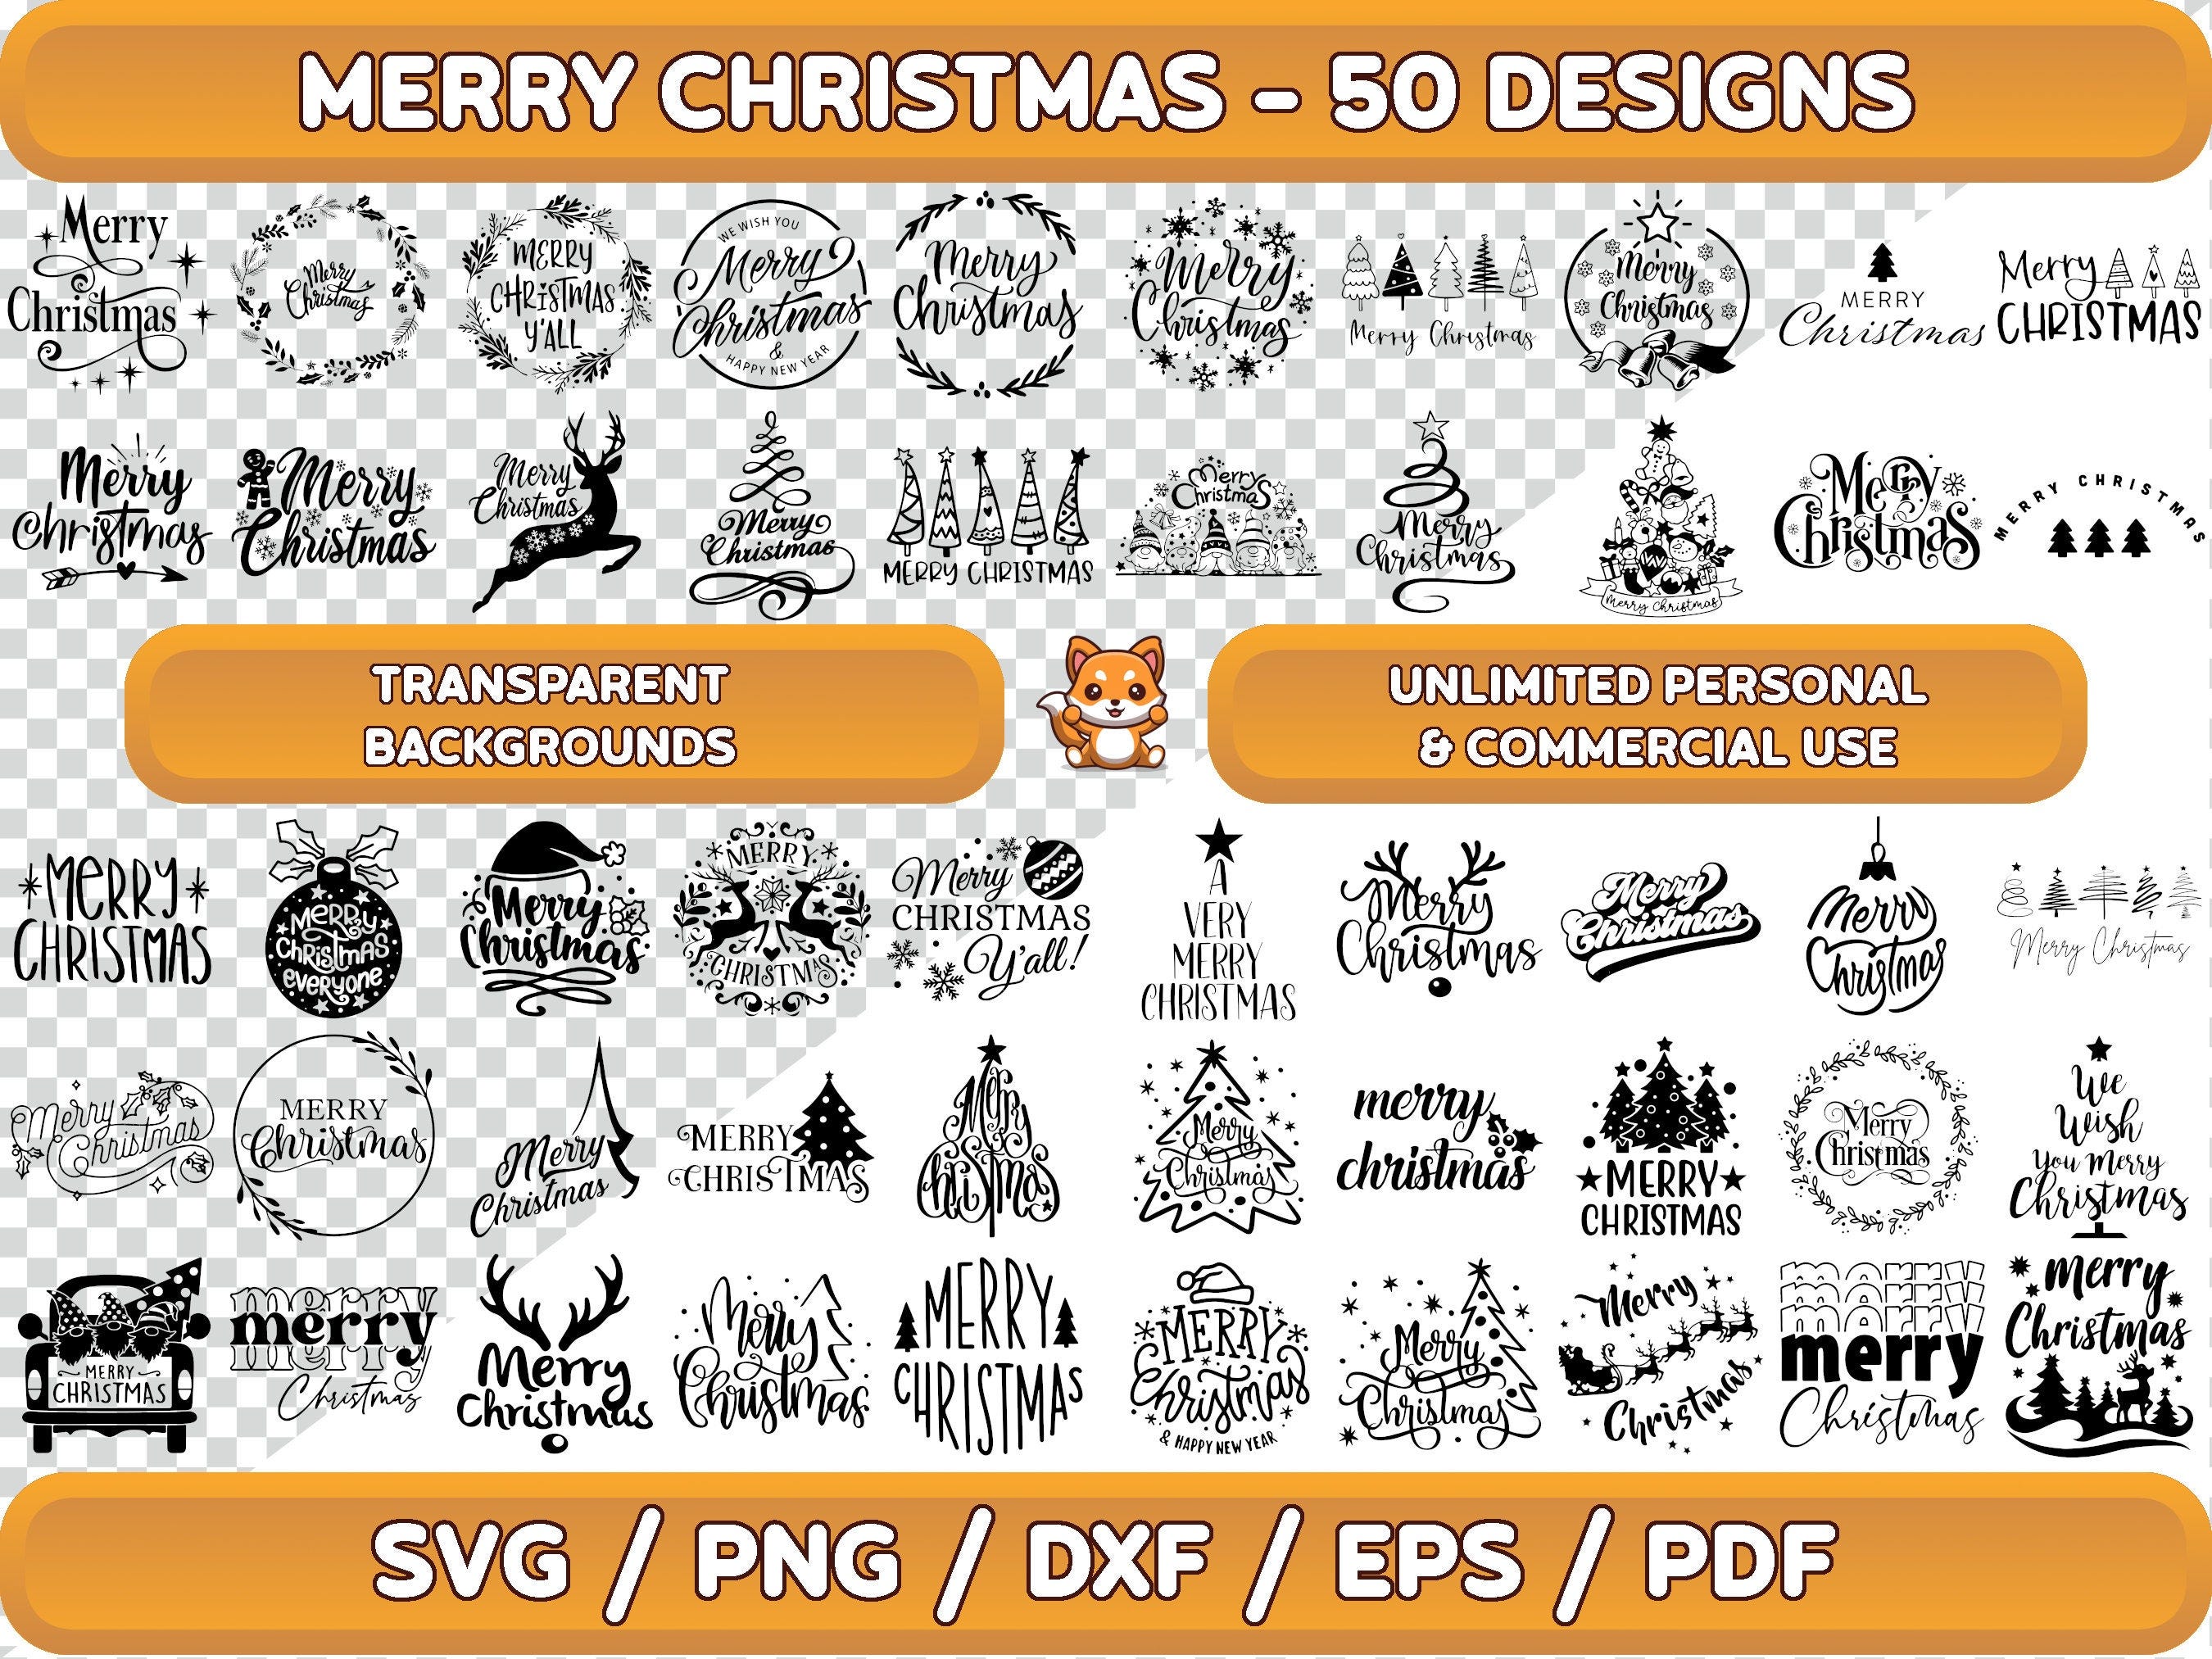 Merry Christmas svg Bundle, Christmas Ornament svg, Christmas Card svg, Merry Christmas png, Christmas Clipart, Christmas Cut Files,Xmas svg